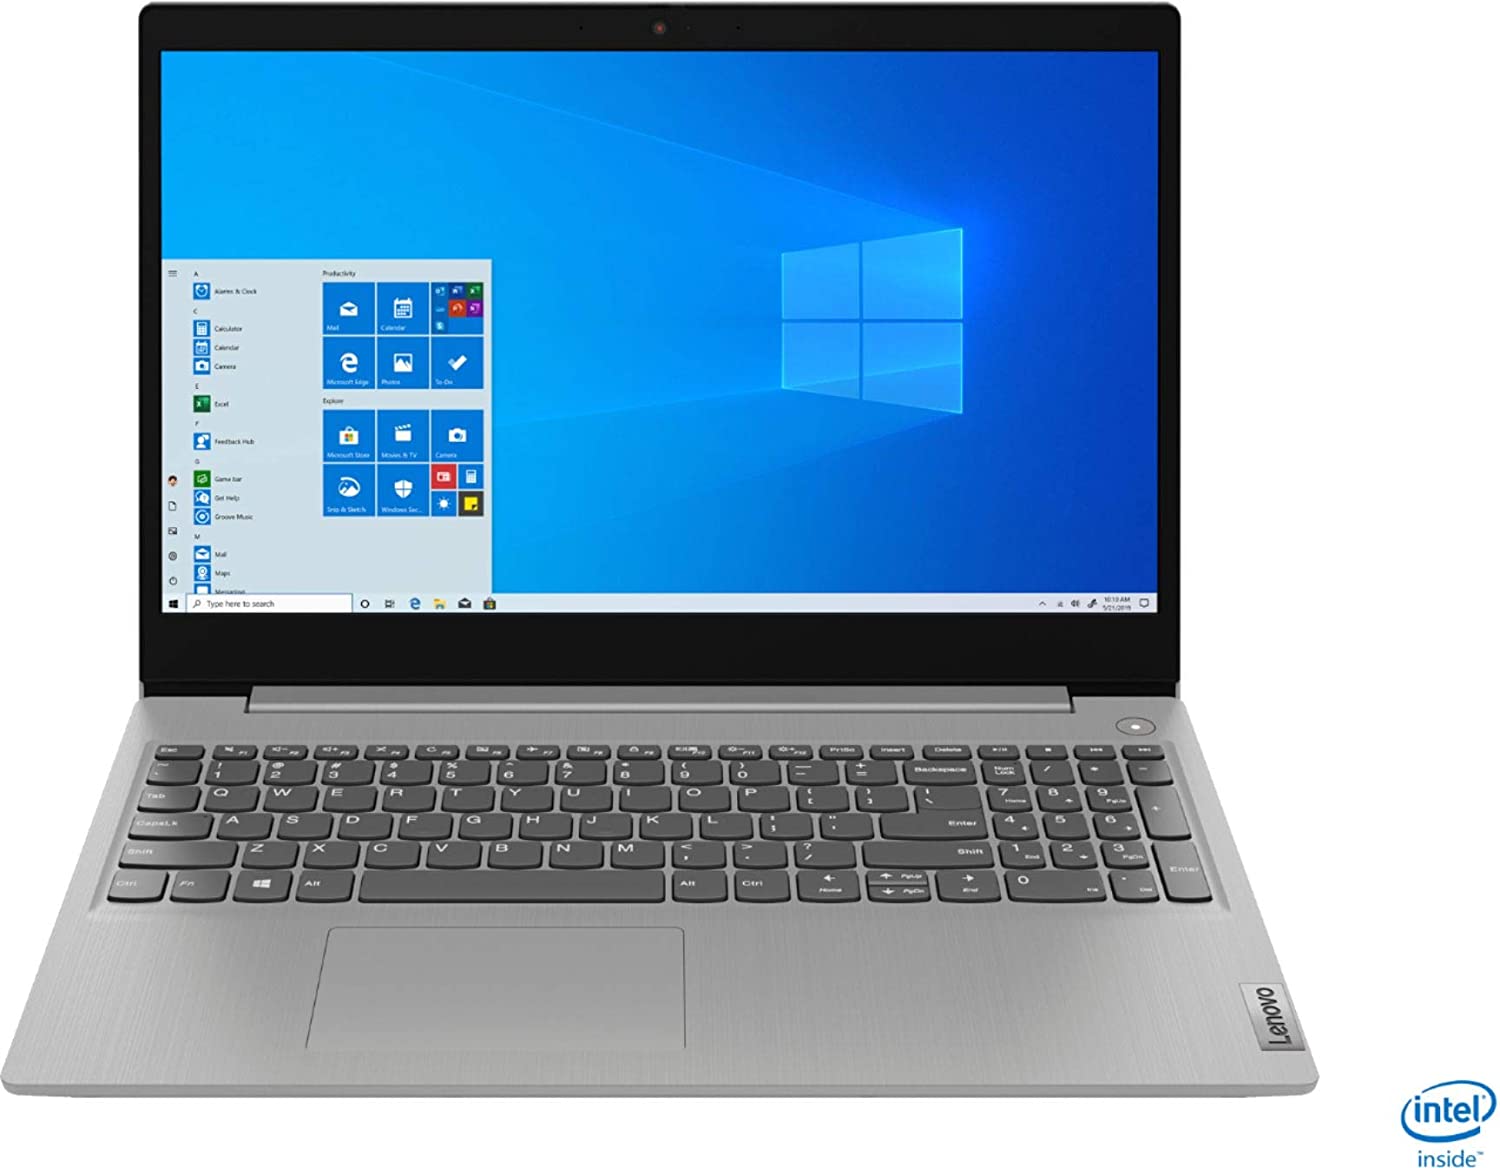 Lenovo - IdeaPad 3 15" Laptop - Intel Core i3-1005G1 - 8GB Memory - 256GB SSD - Platinum Grey - 81WE011UUS - image 1 of 6